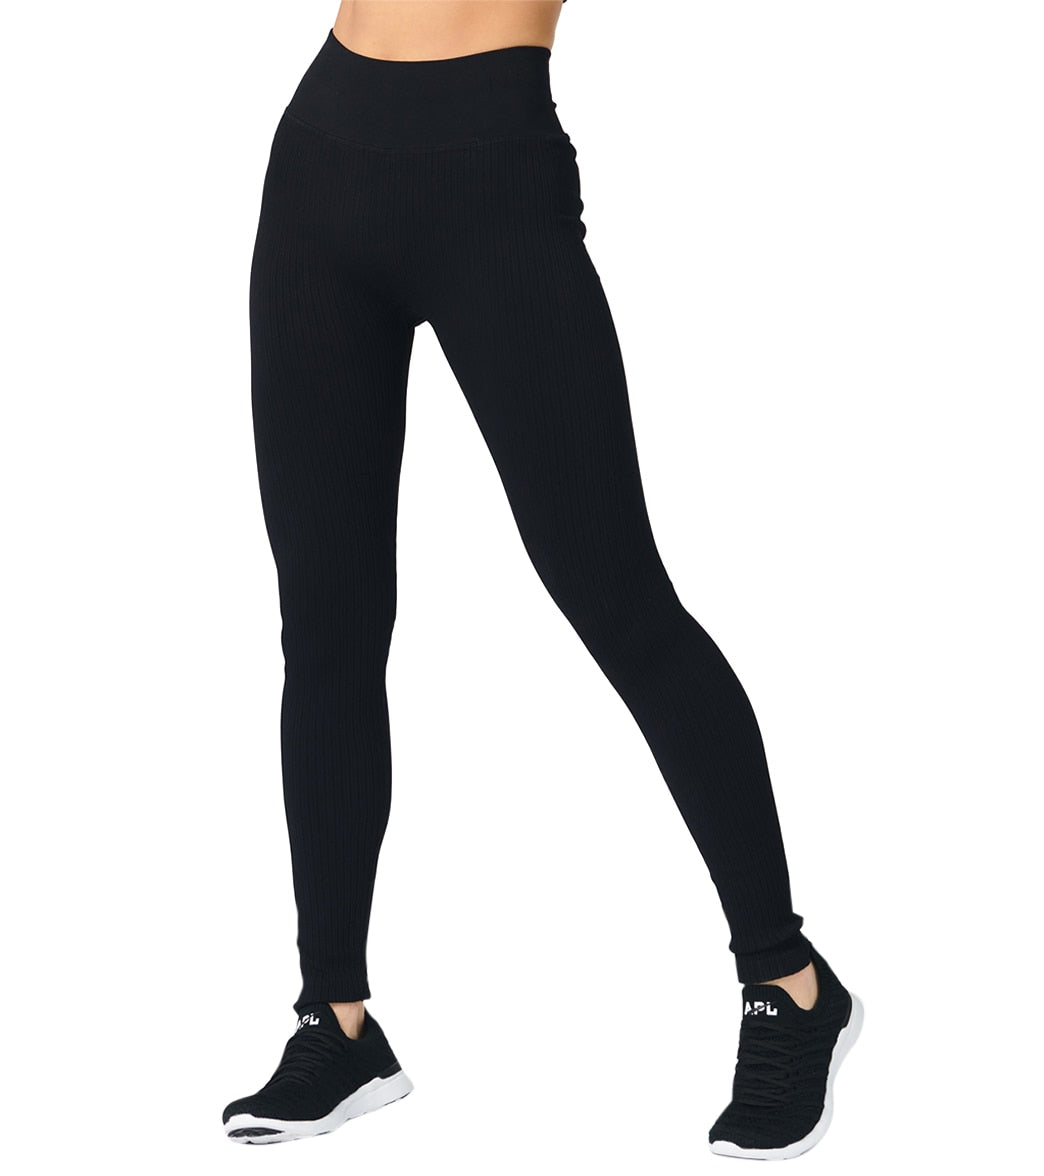 Gaiam Women's High Waisted Capri Yoga Pants - High Rise Compression Workout